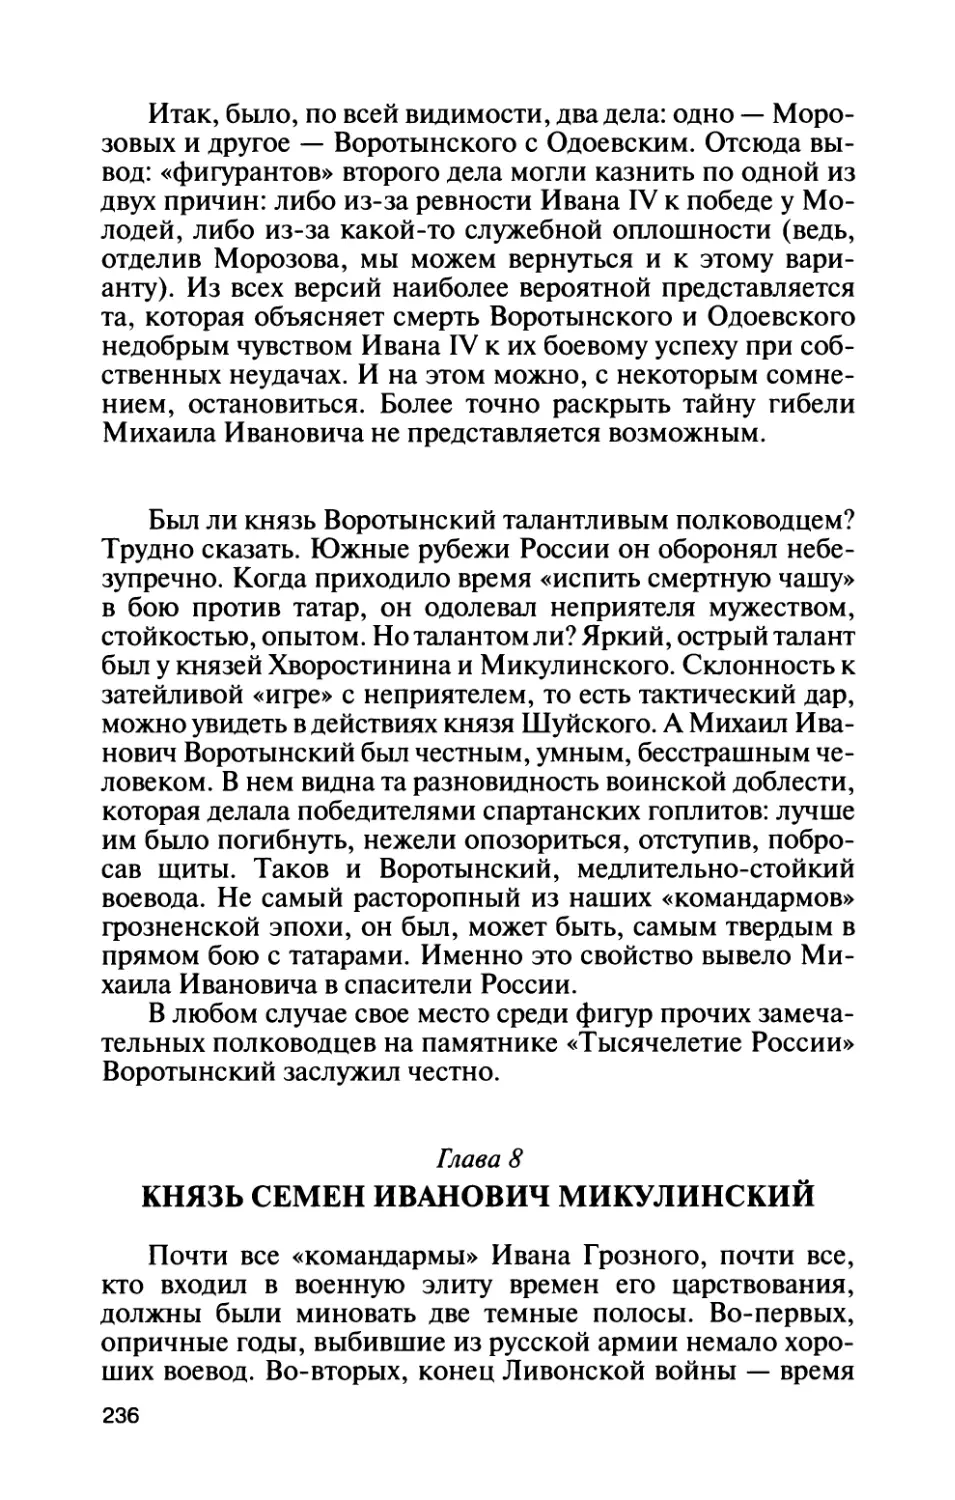 Глава 8. Князь Семен Иванович Микулинский